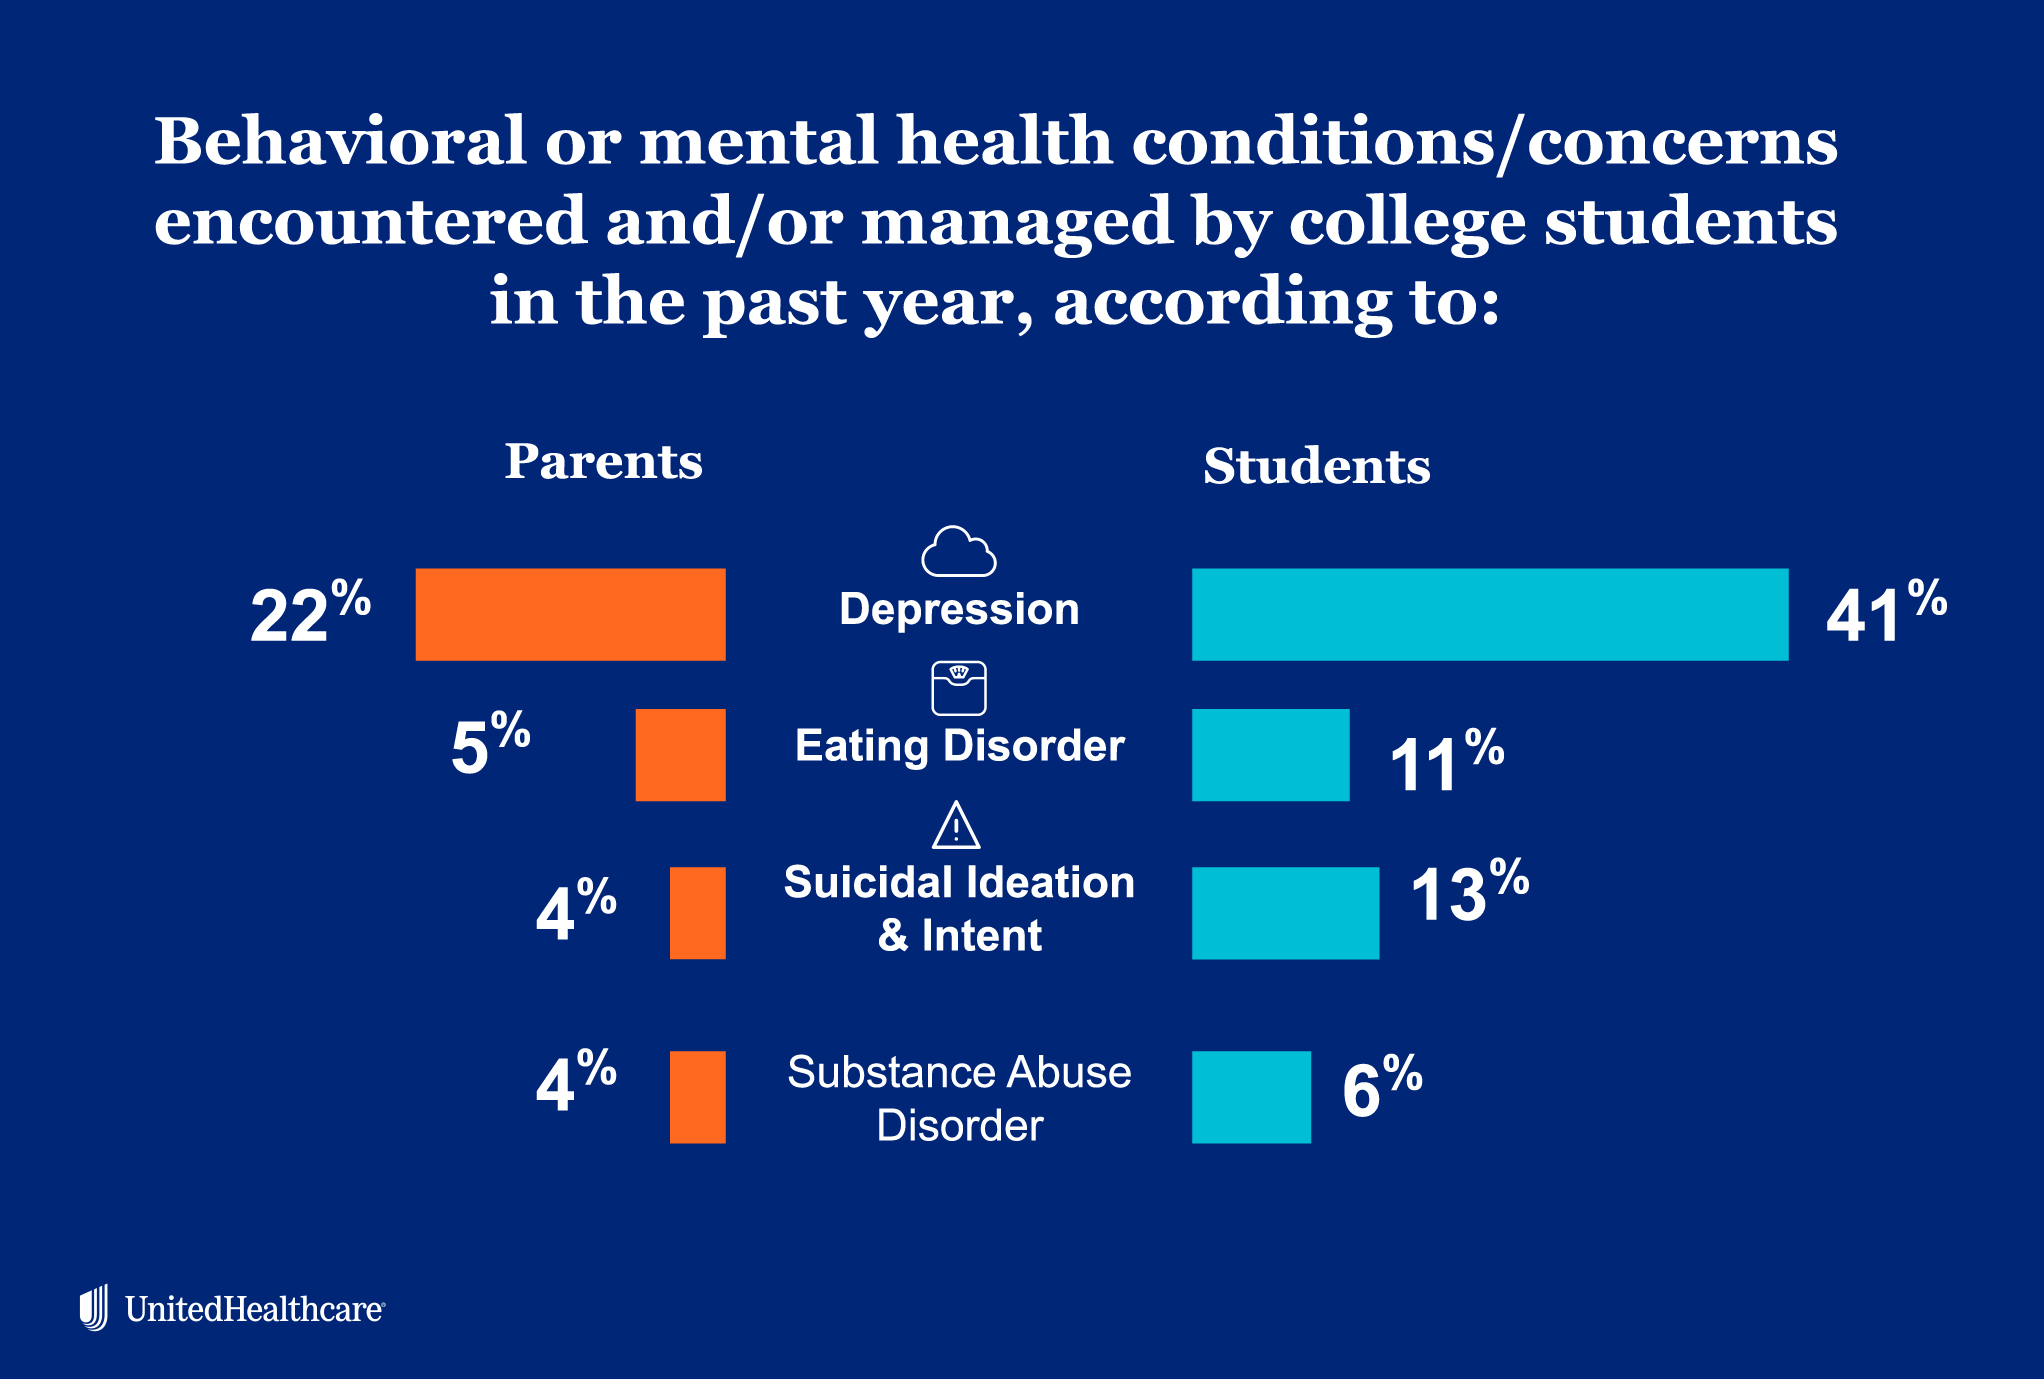 2023 03 22 Uhc College Student Mental Health Report Vs Parents 